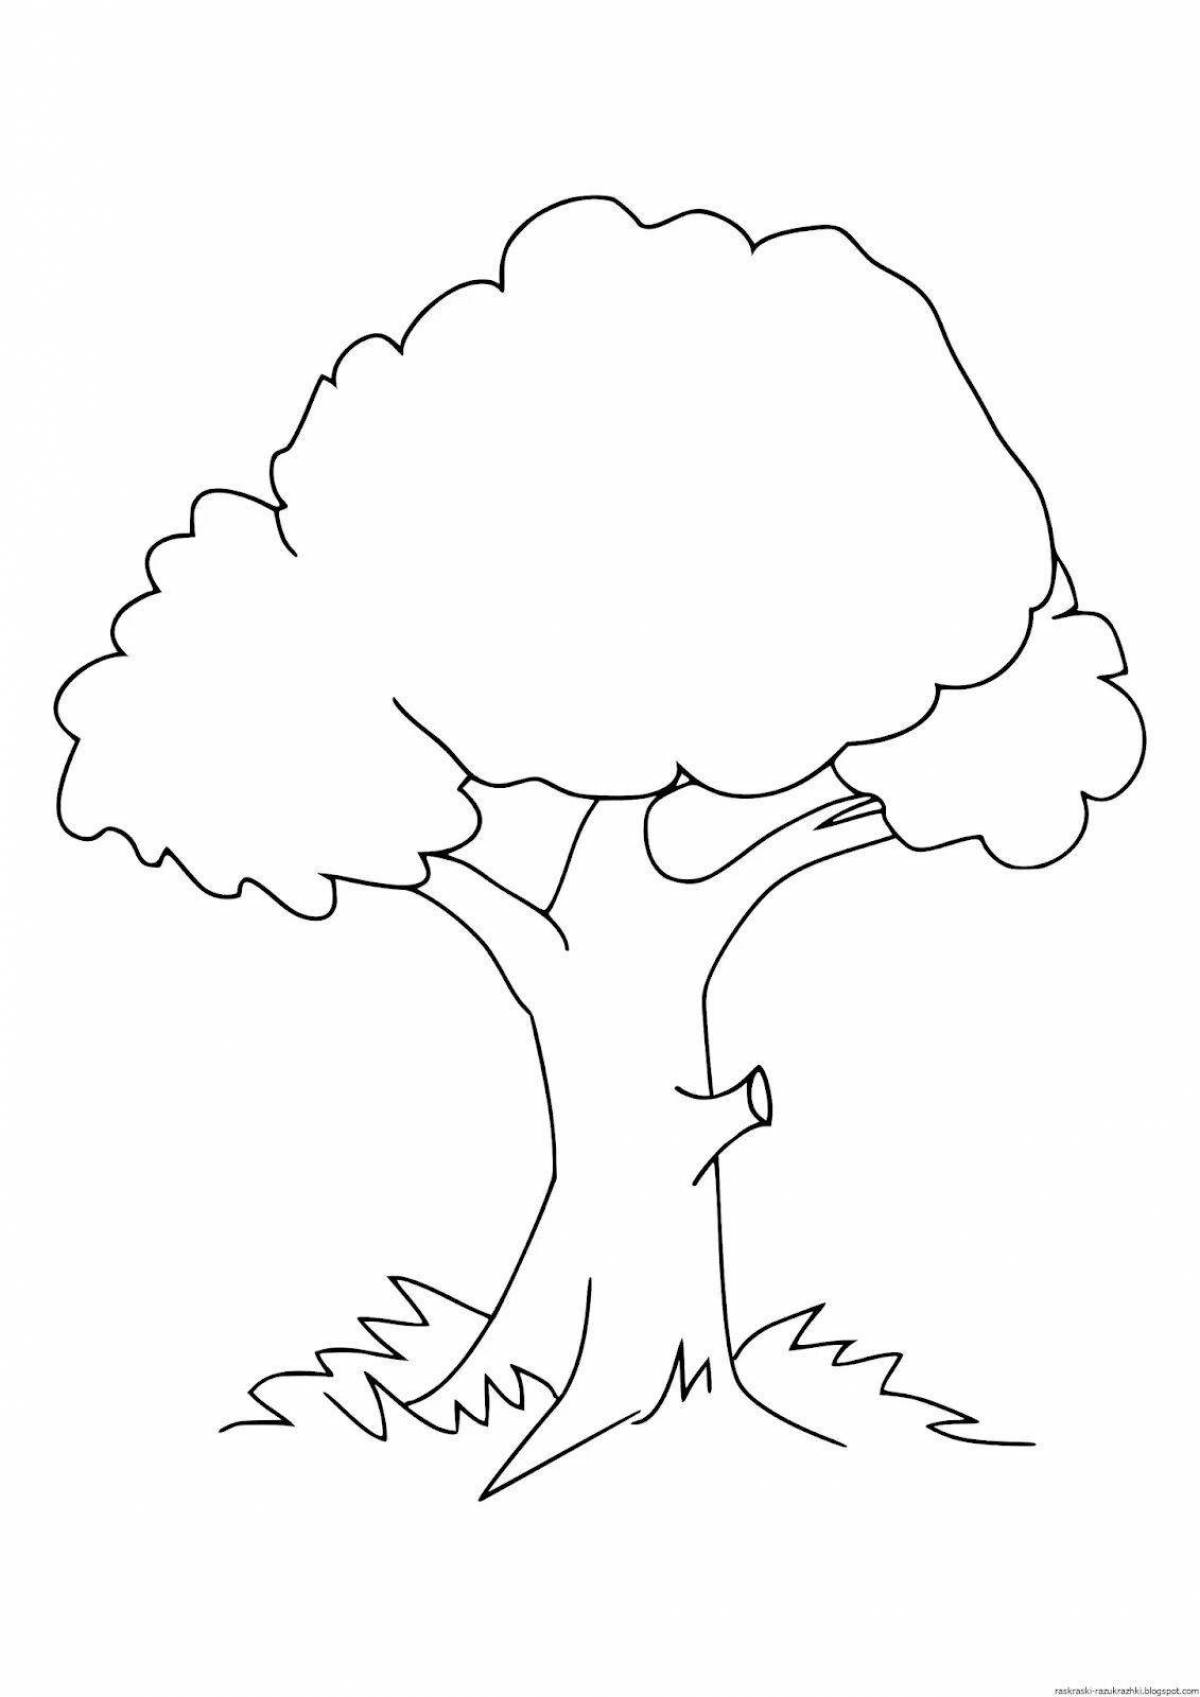 Joyful tree drawing for kids